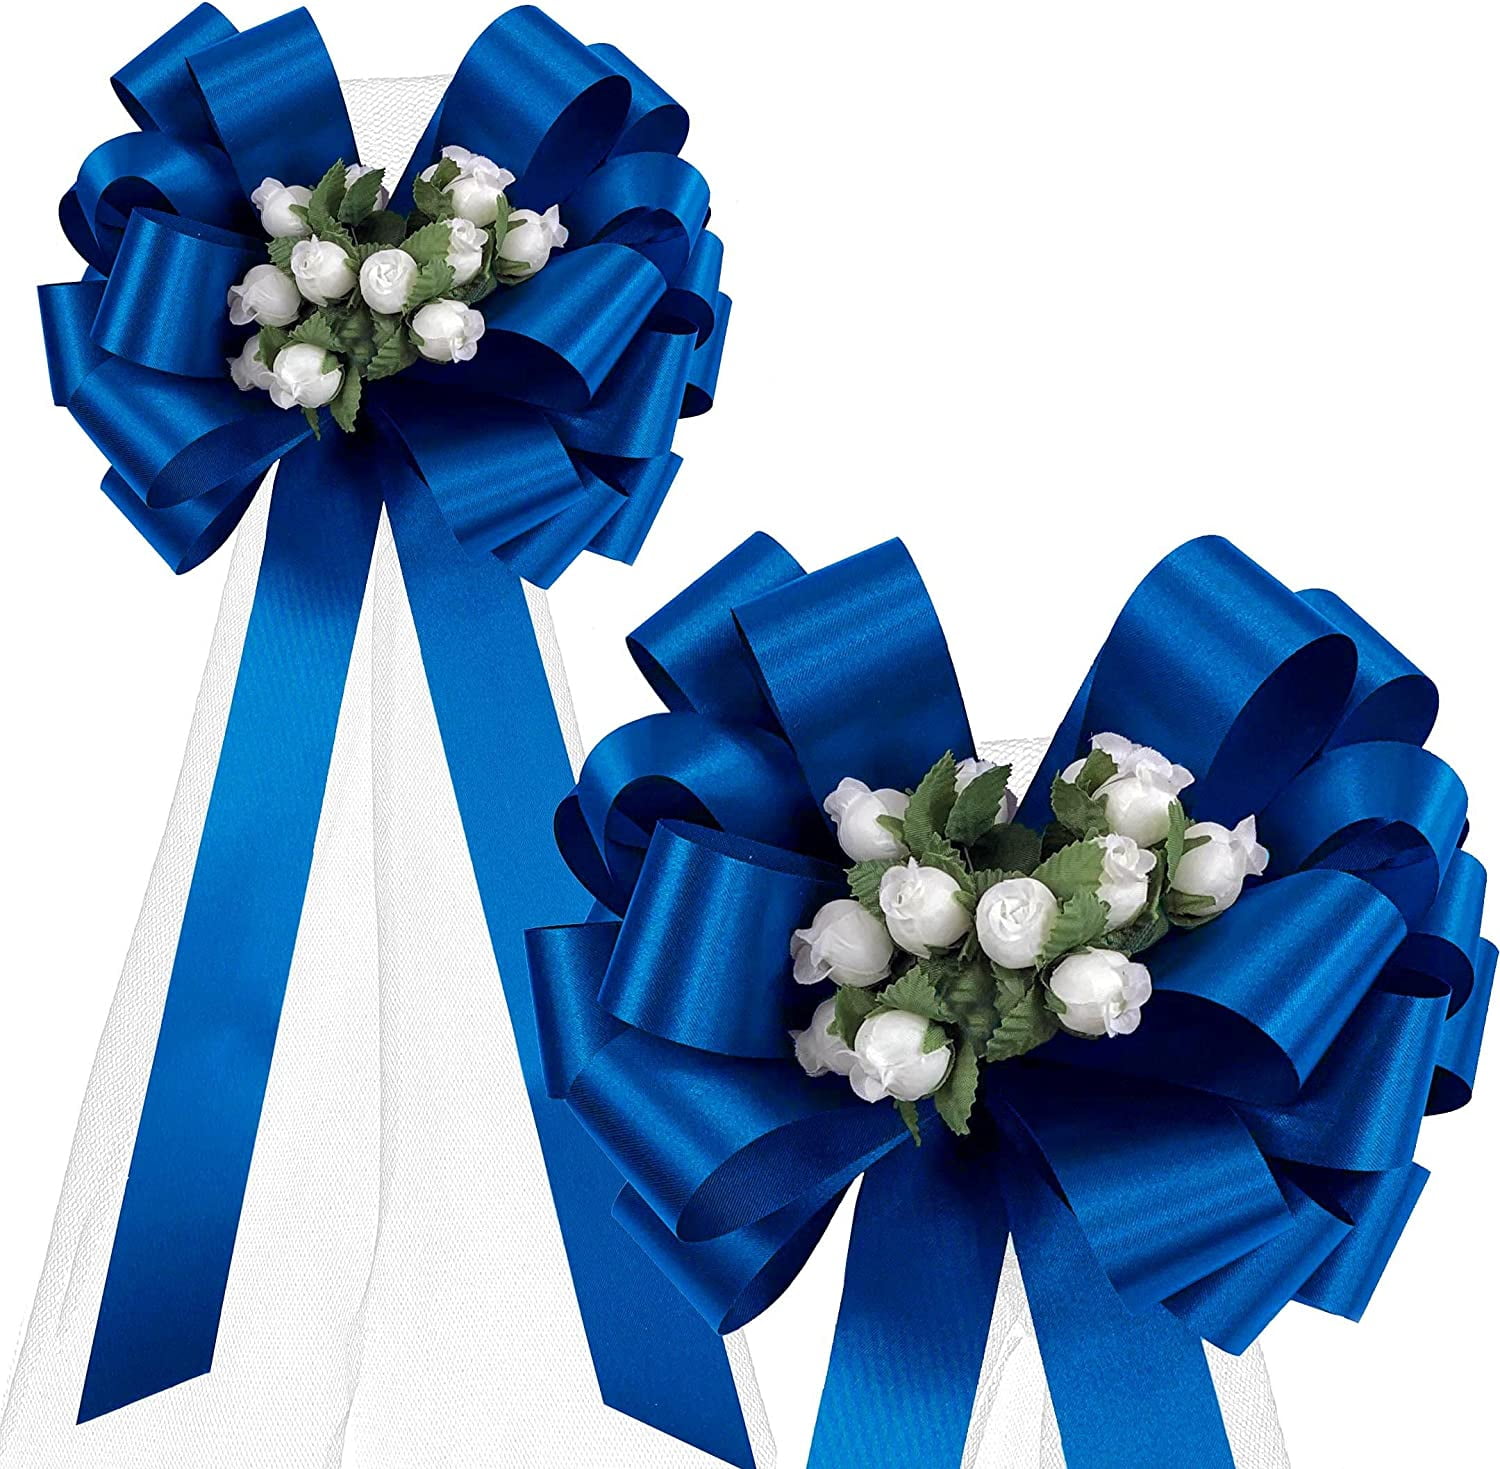  NOLITOY 3 Rolls Light Blue Ribbon Seam Binding Wedding Satin  Ribbon Gift wrap Ribbon Gift Ribbon Corona para Ramos buchones de Flores  Ribbon for Gift Baskets wear-Resistant Ribbon Box Bulk 